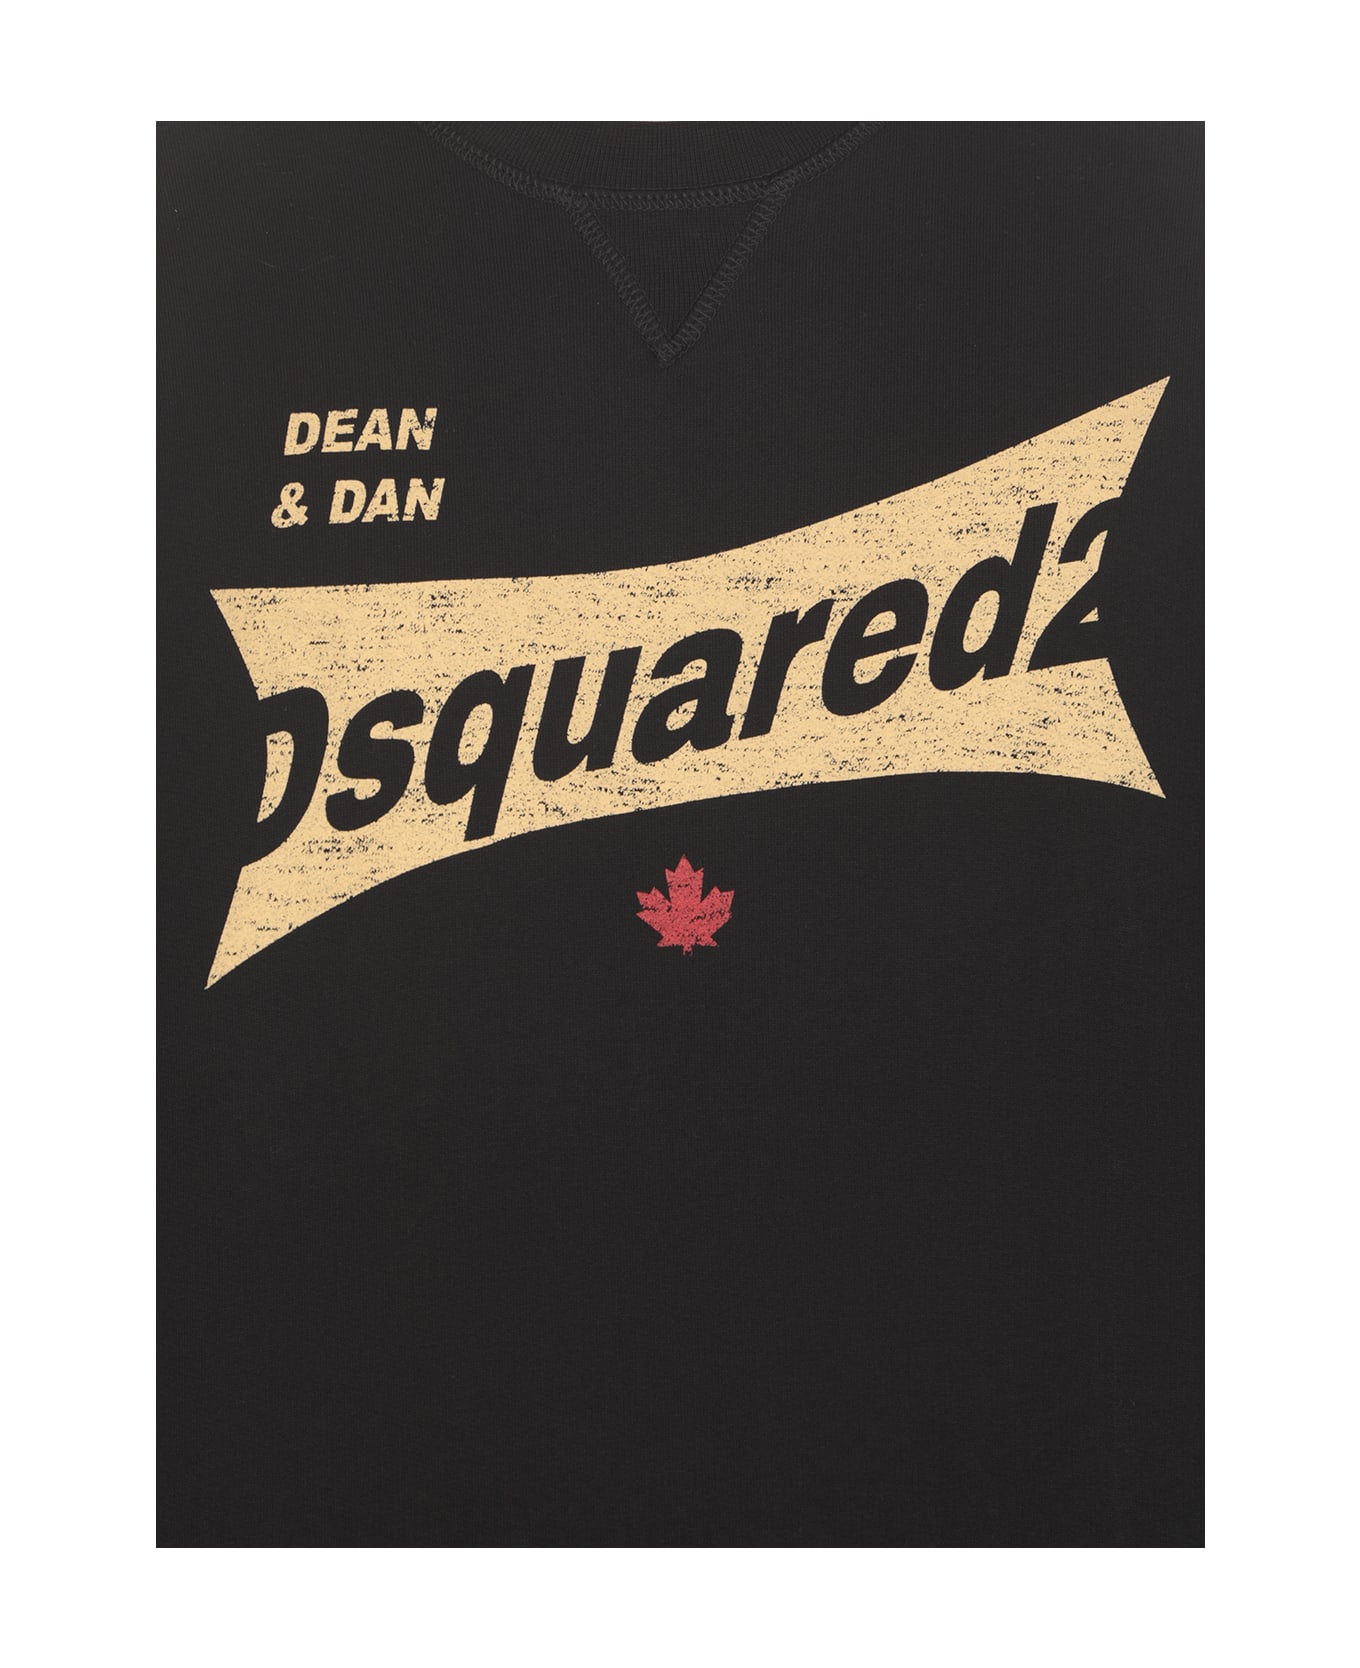 Dsquared2 Sweatshirt With Logo - Black